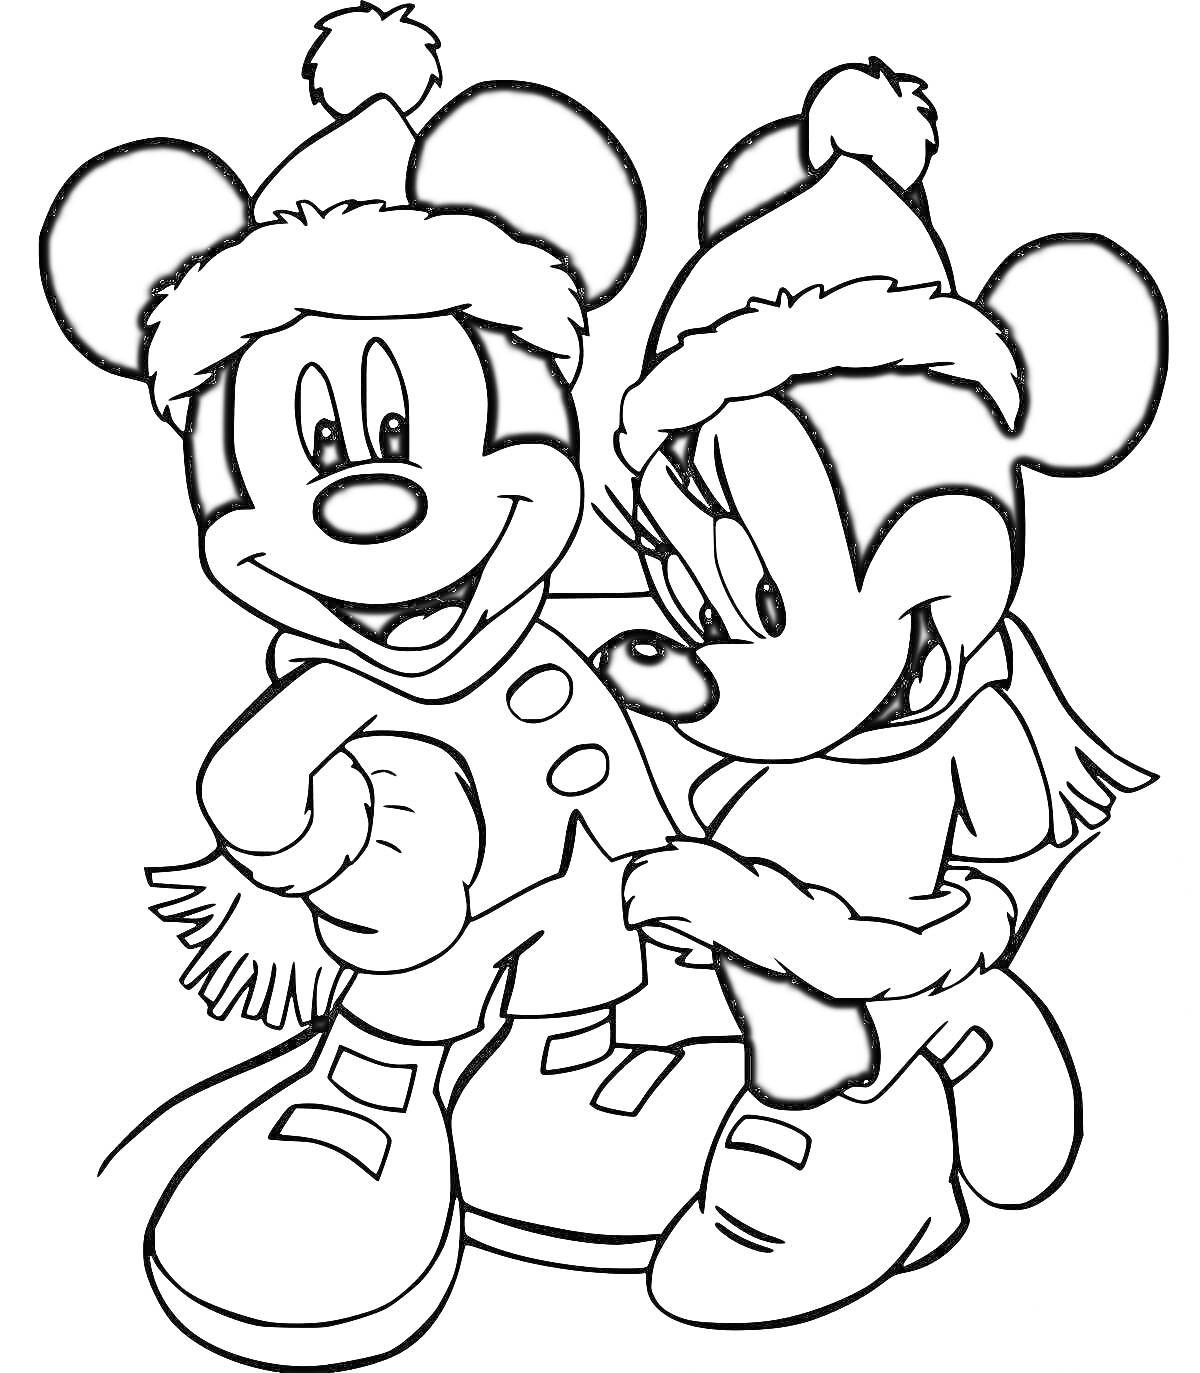 Раскраска Микки и Минни Маус в новогодних костюмах с шапочками и шарфами